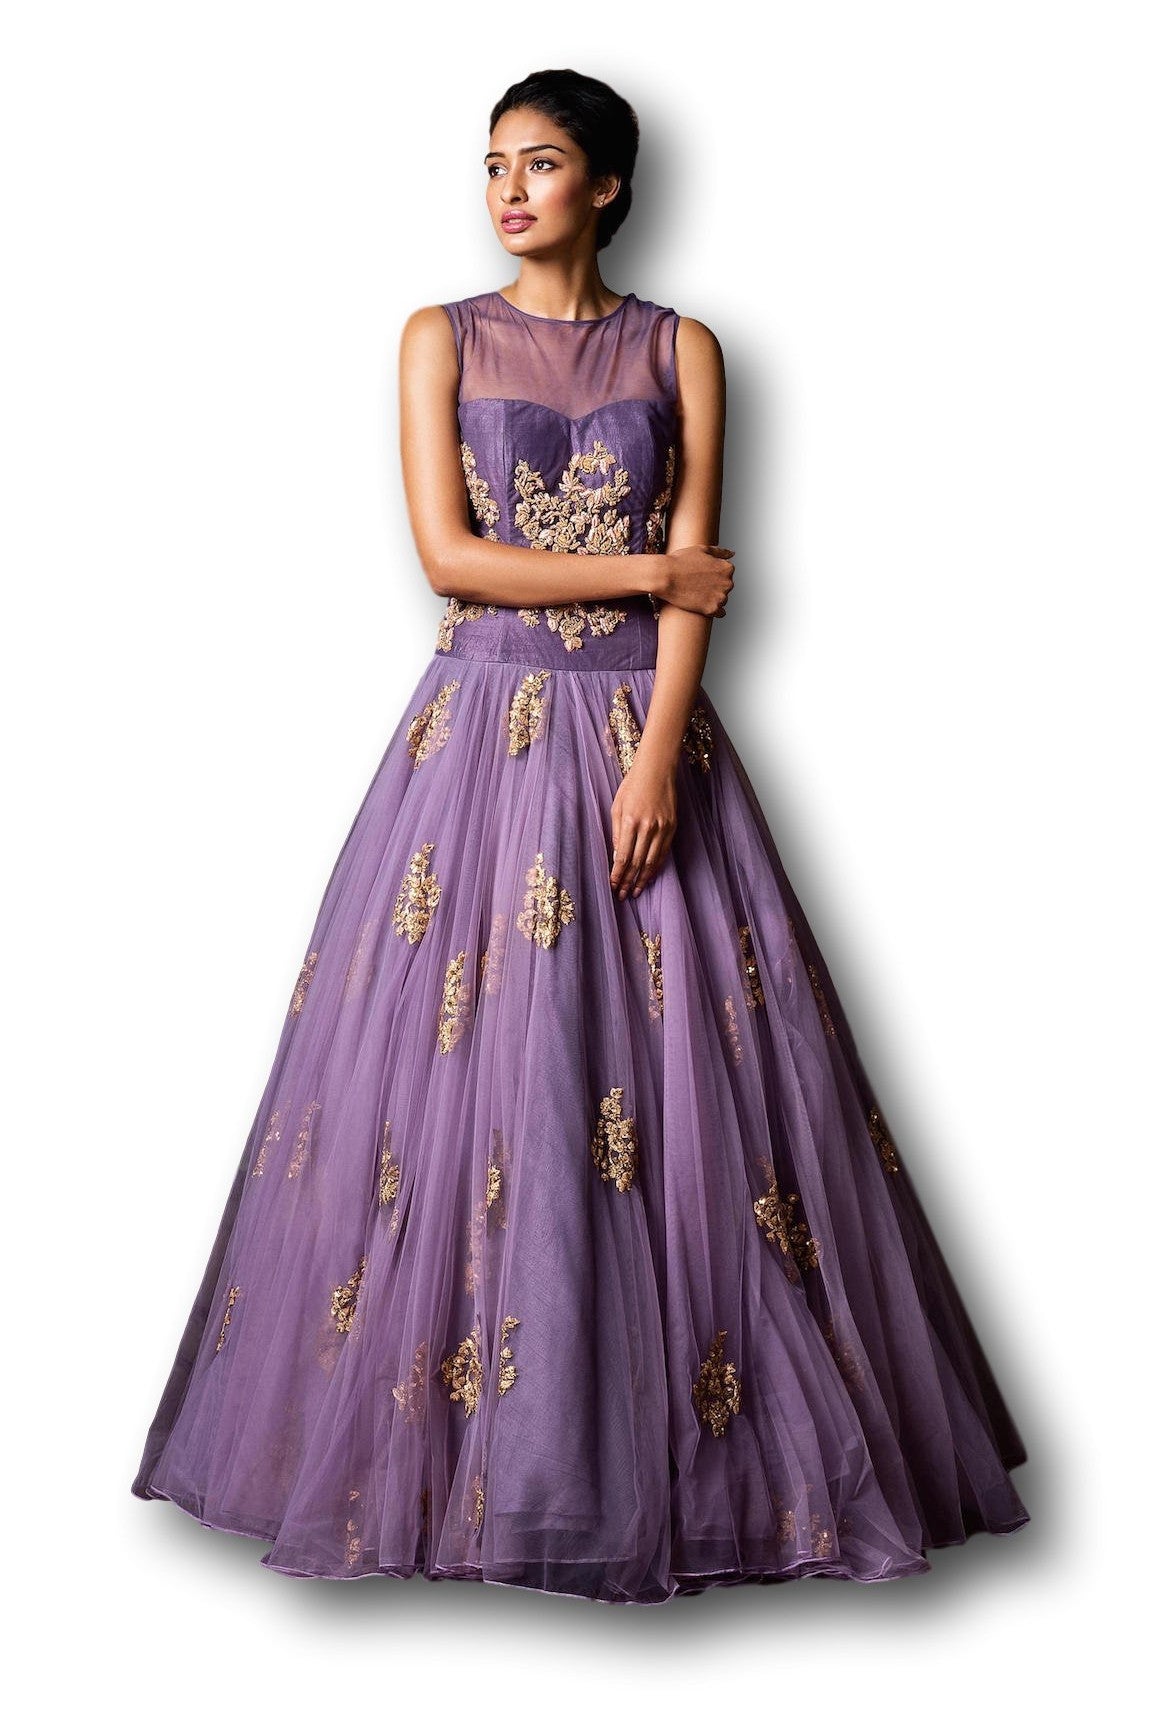 9 Best Purse Colors That Go With a Lilac & Lavender Dress | Purple wedding  dress, Lavender color dress, Lavender dresses